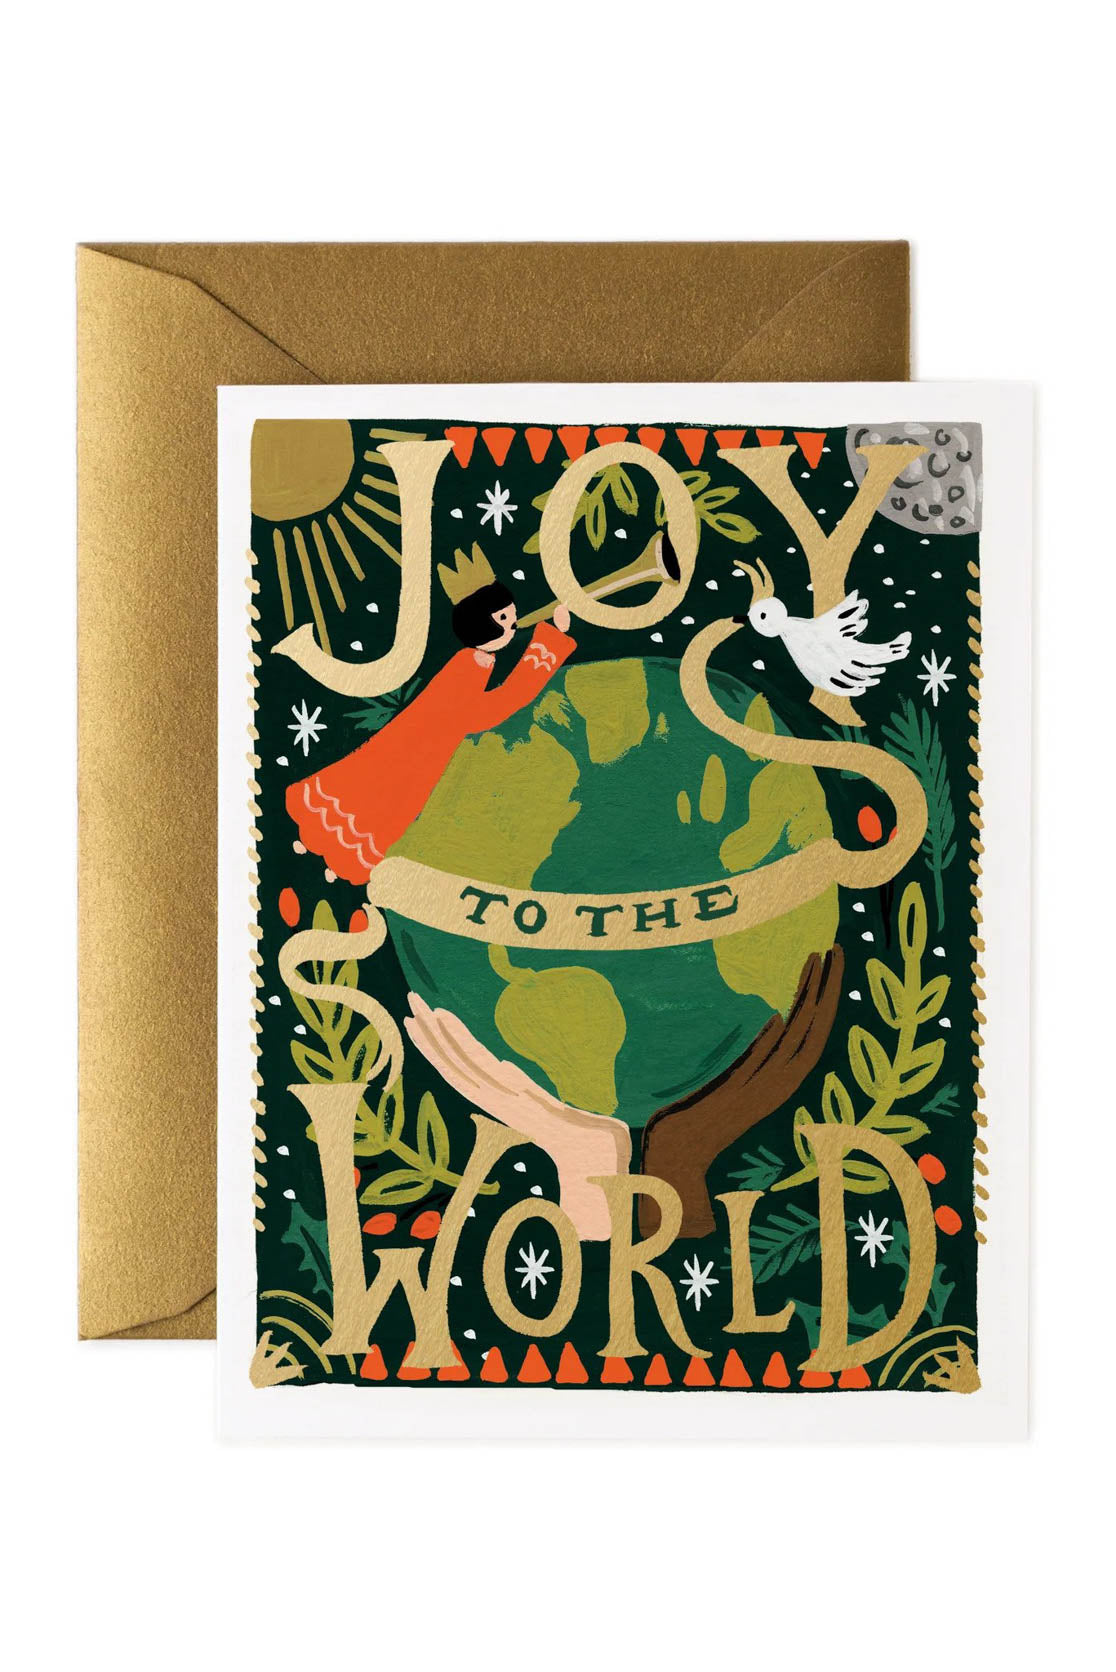 Joy To The World Christmas Card